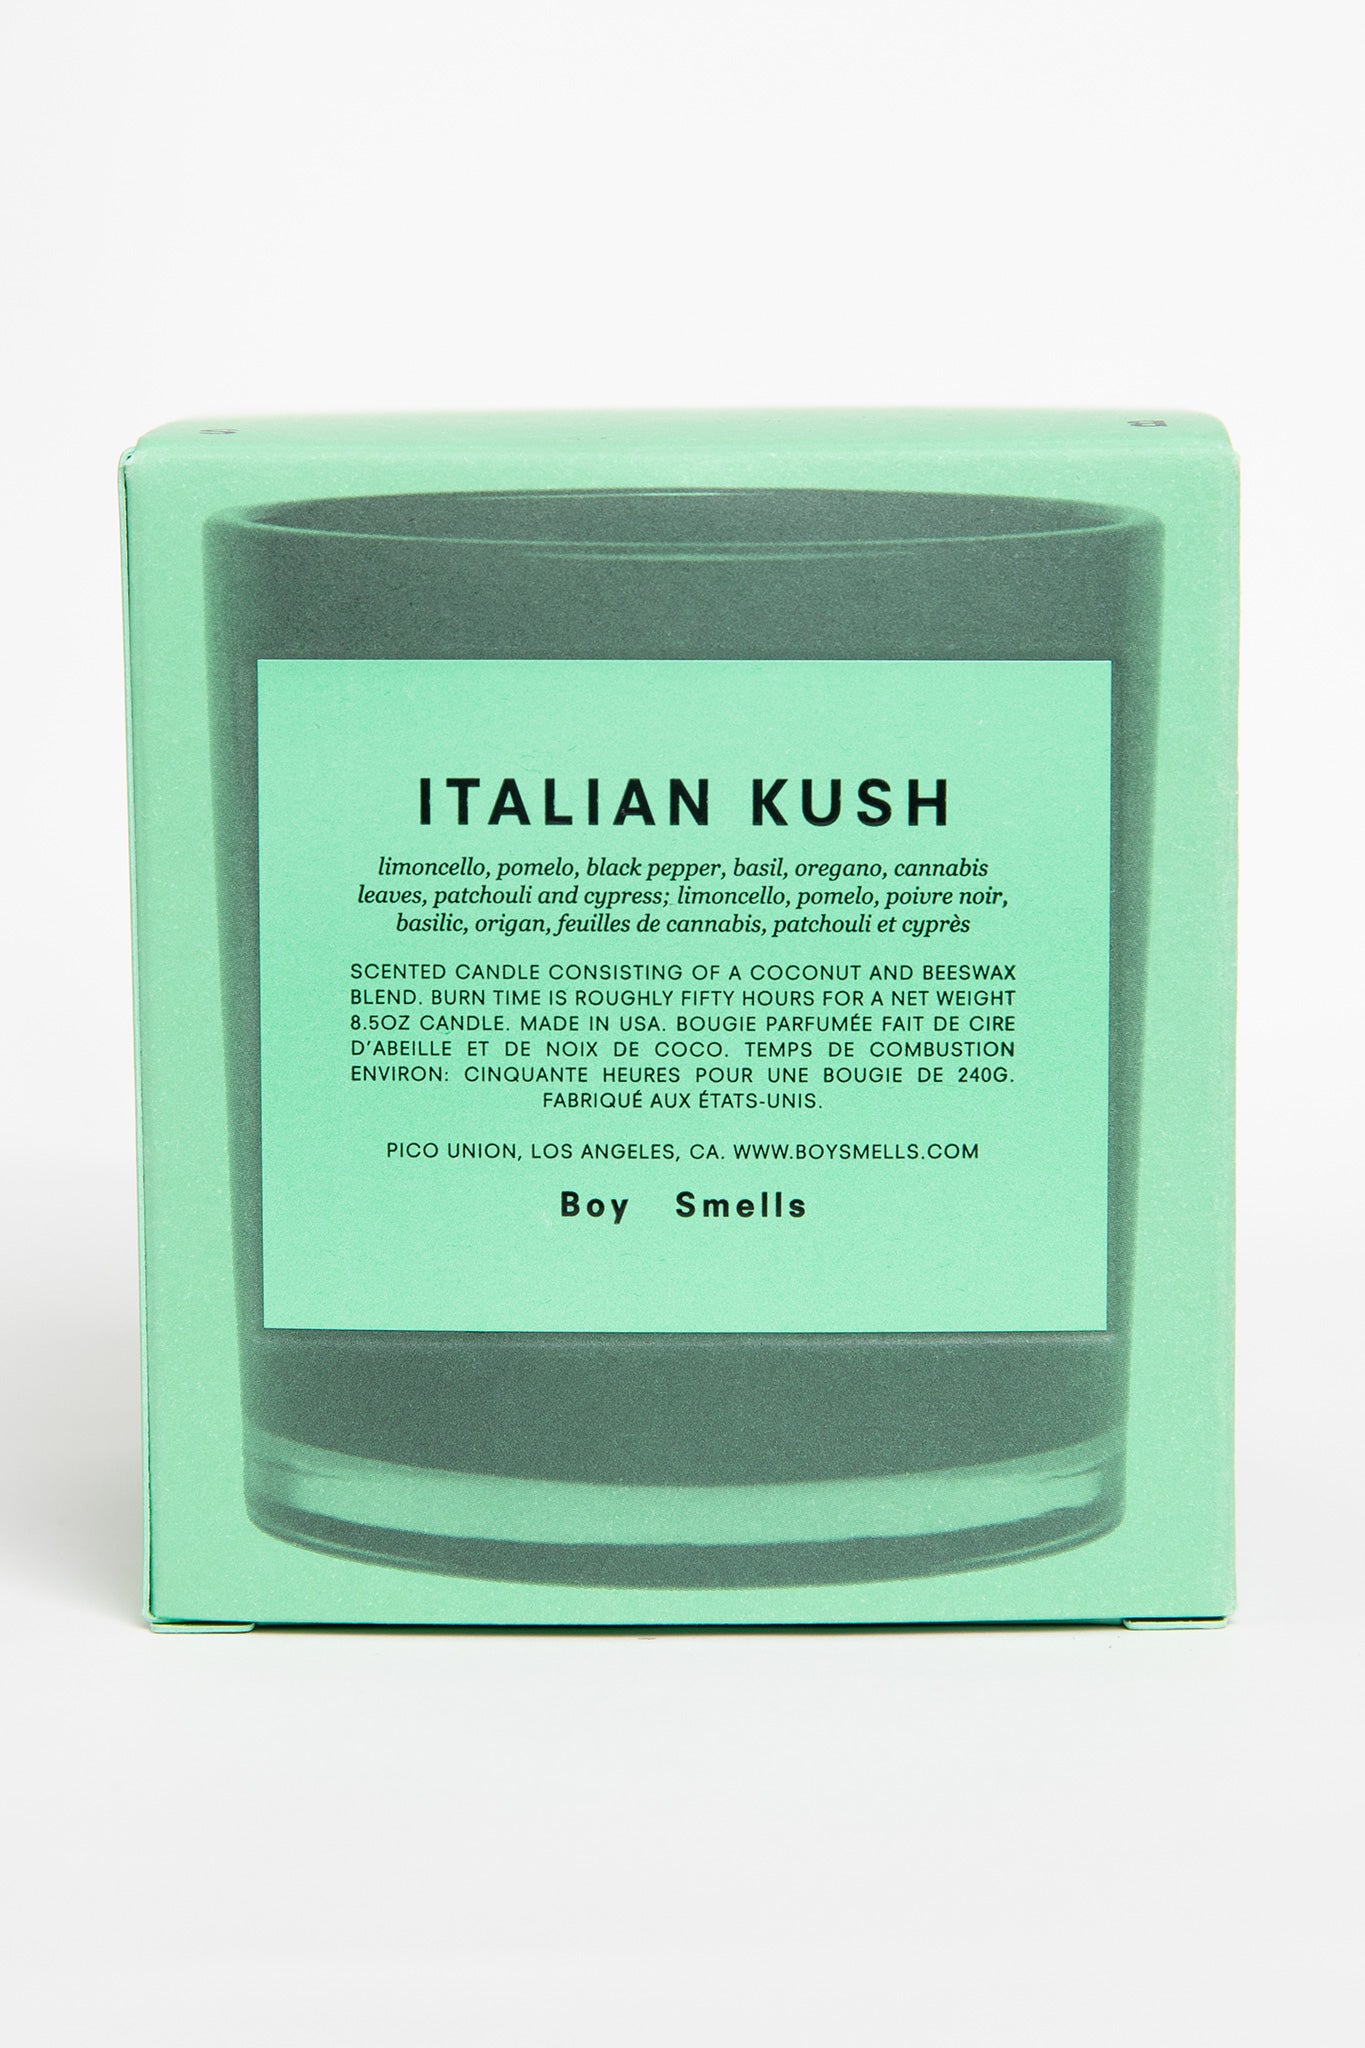 Italian Kush Candle Accessories Boy Smells   